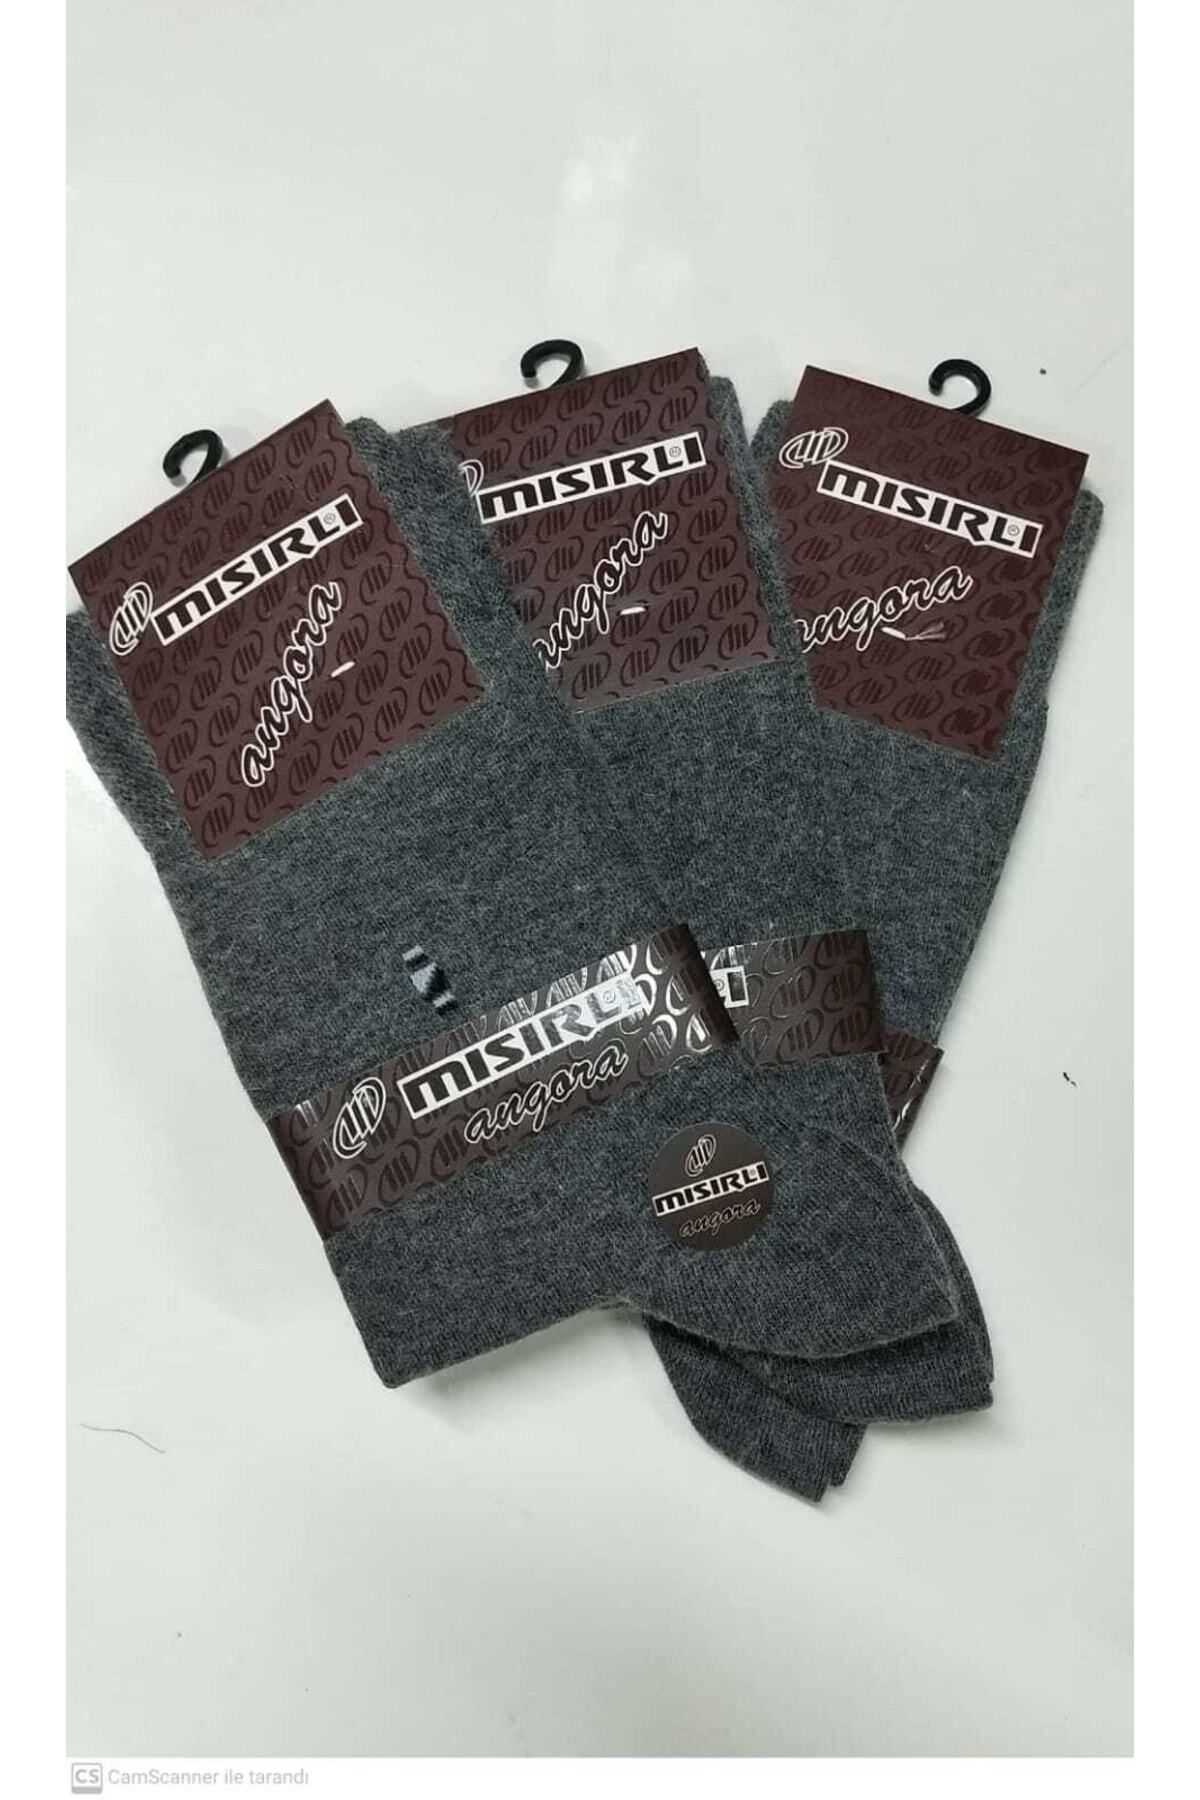 Angora Wool Thermal Socks - Grey